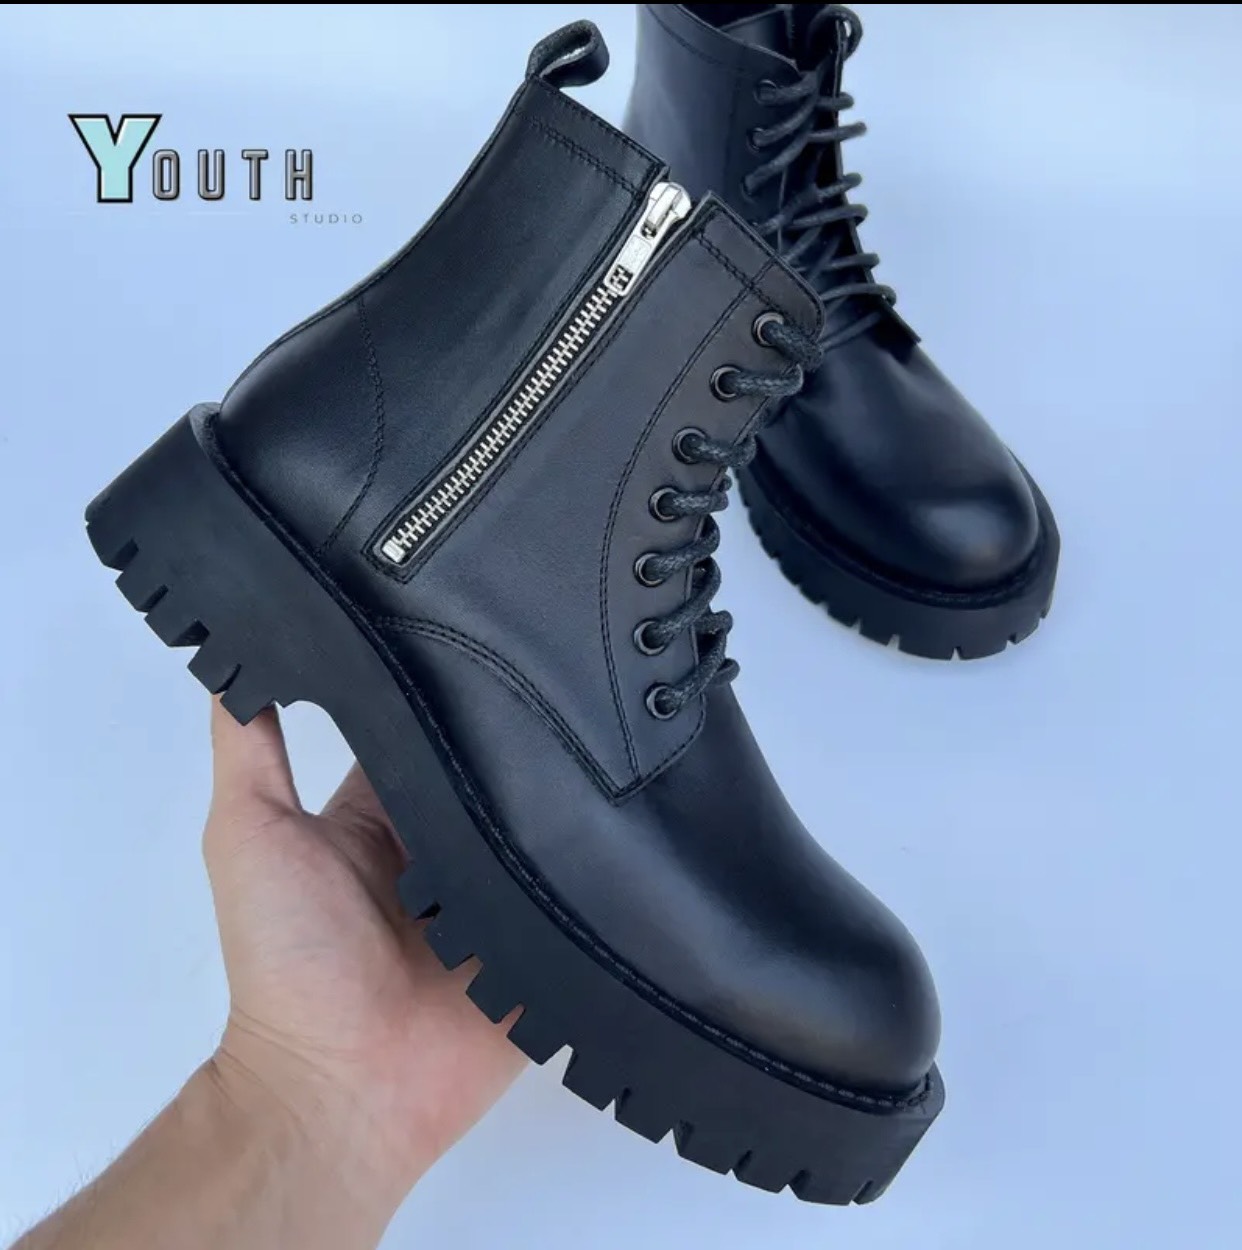 Giày Combat Boots nam cổ cao da bò nappa youth